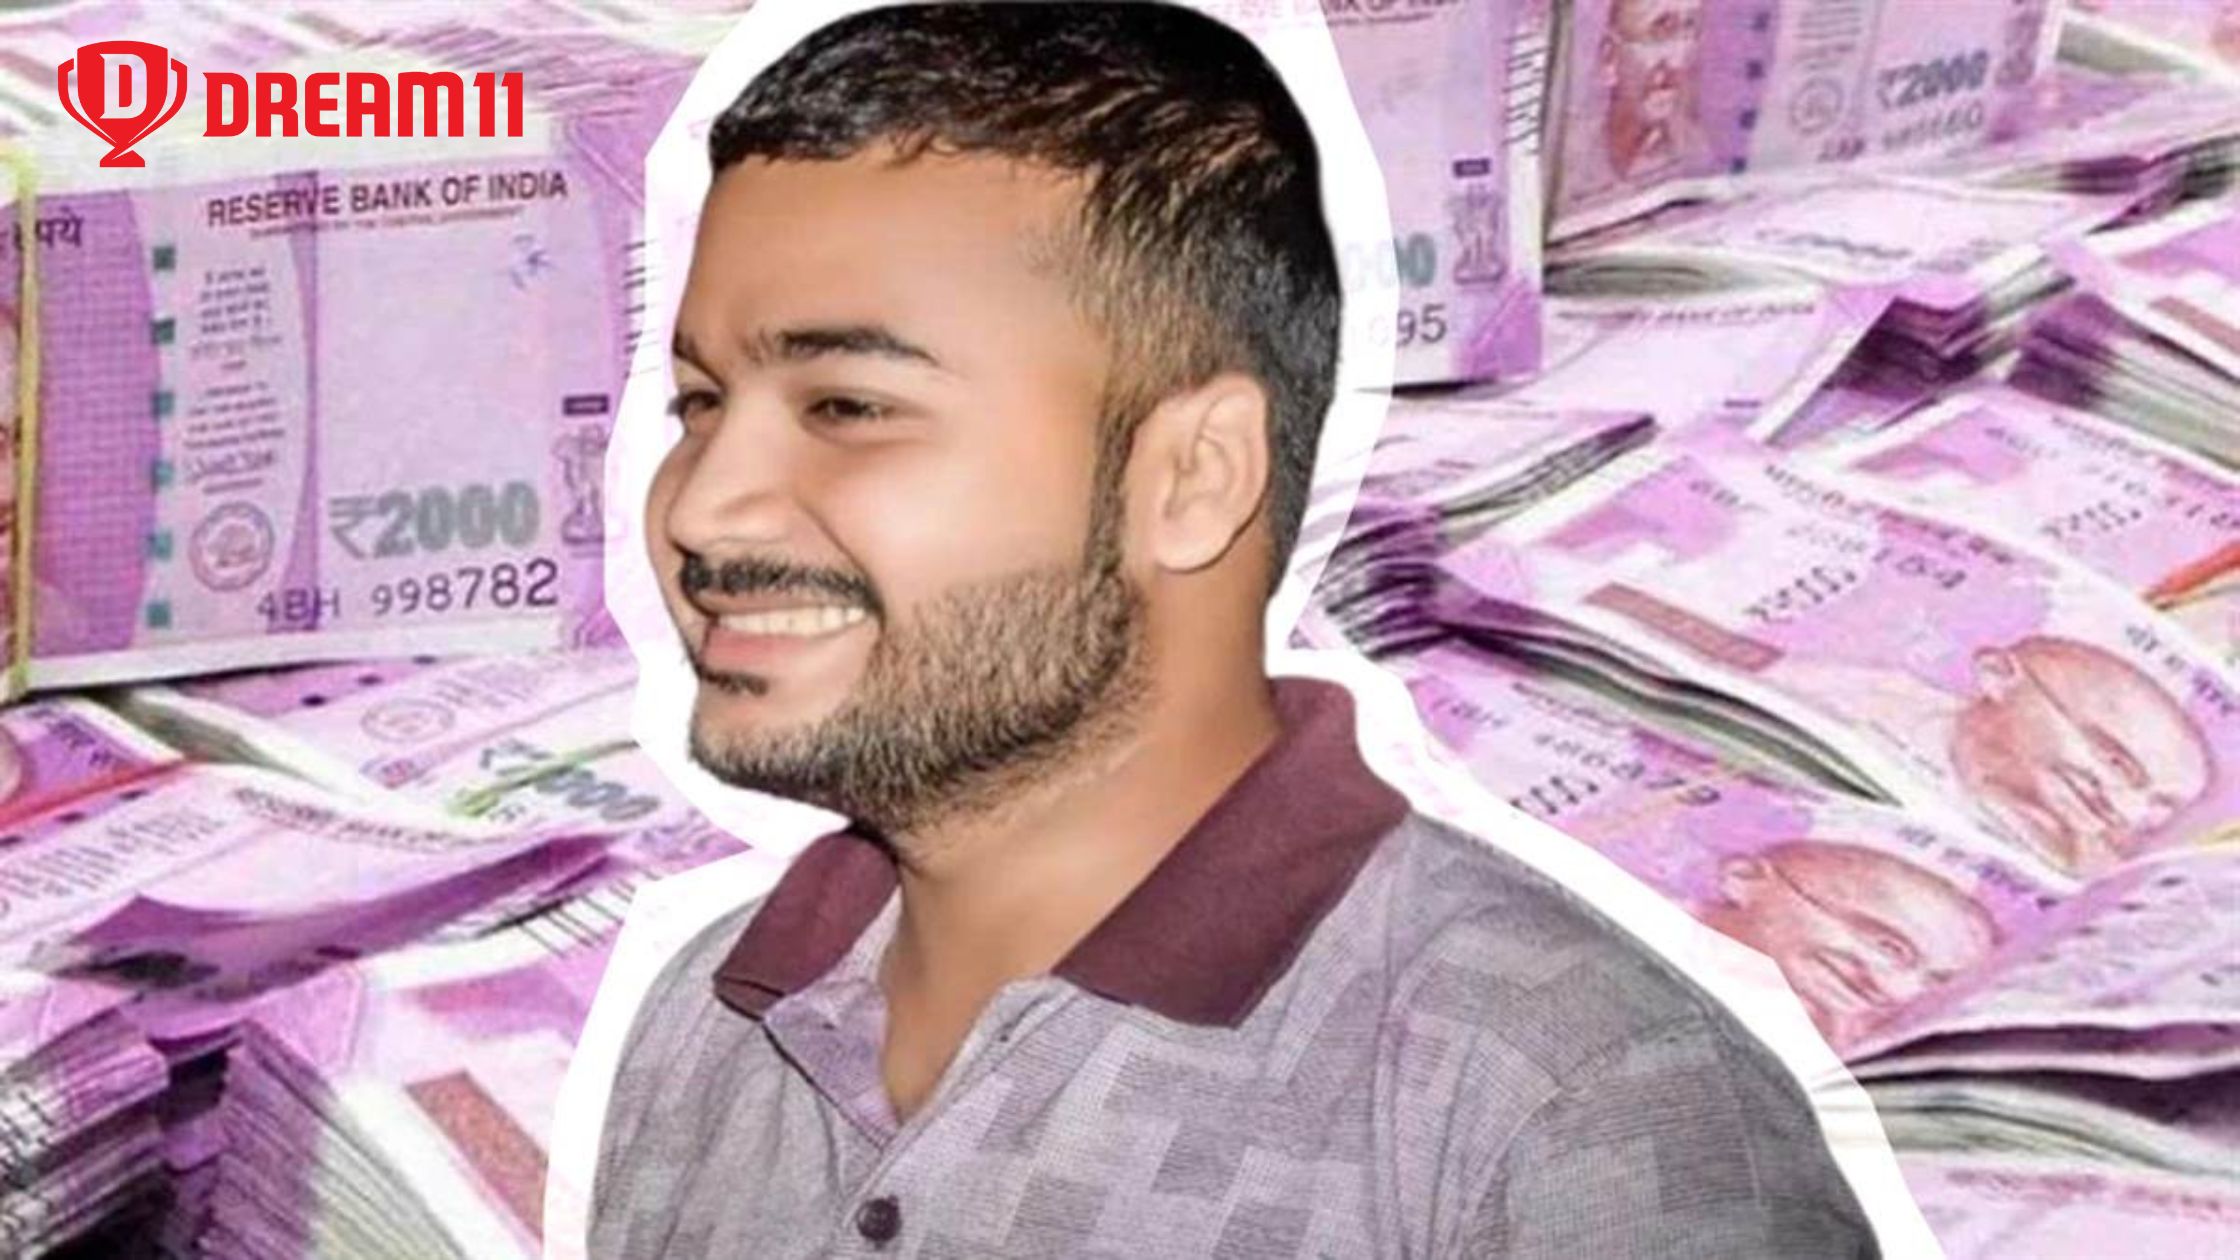 saurabh of arrah won 1 crore from dream 11